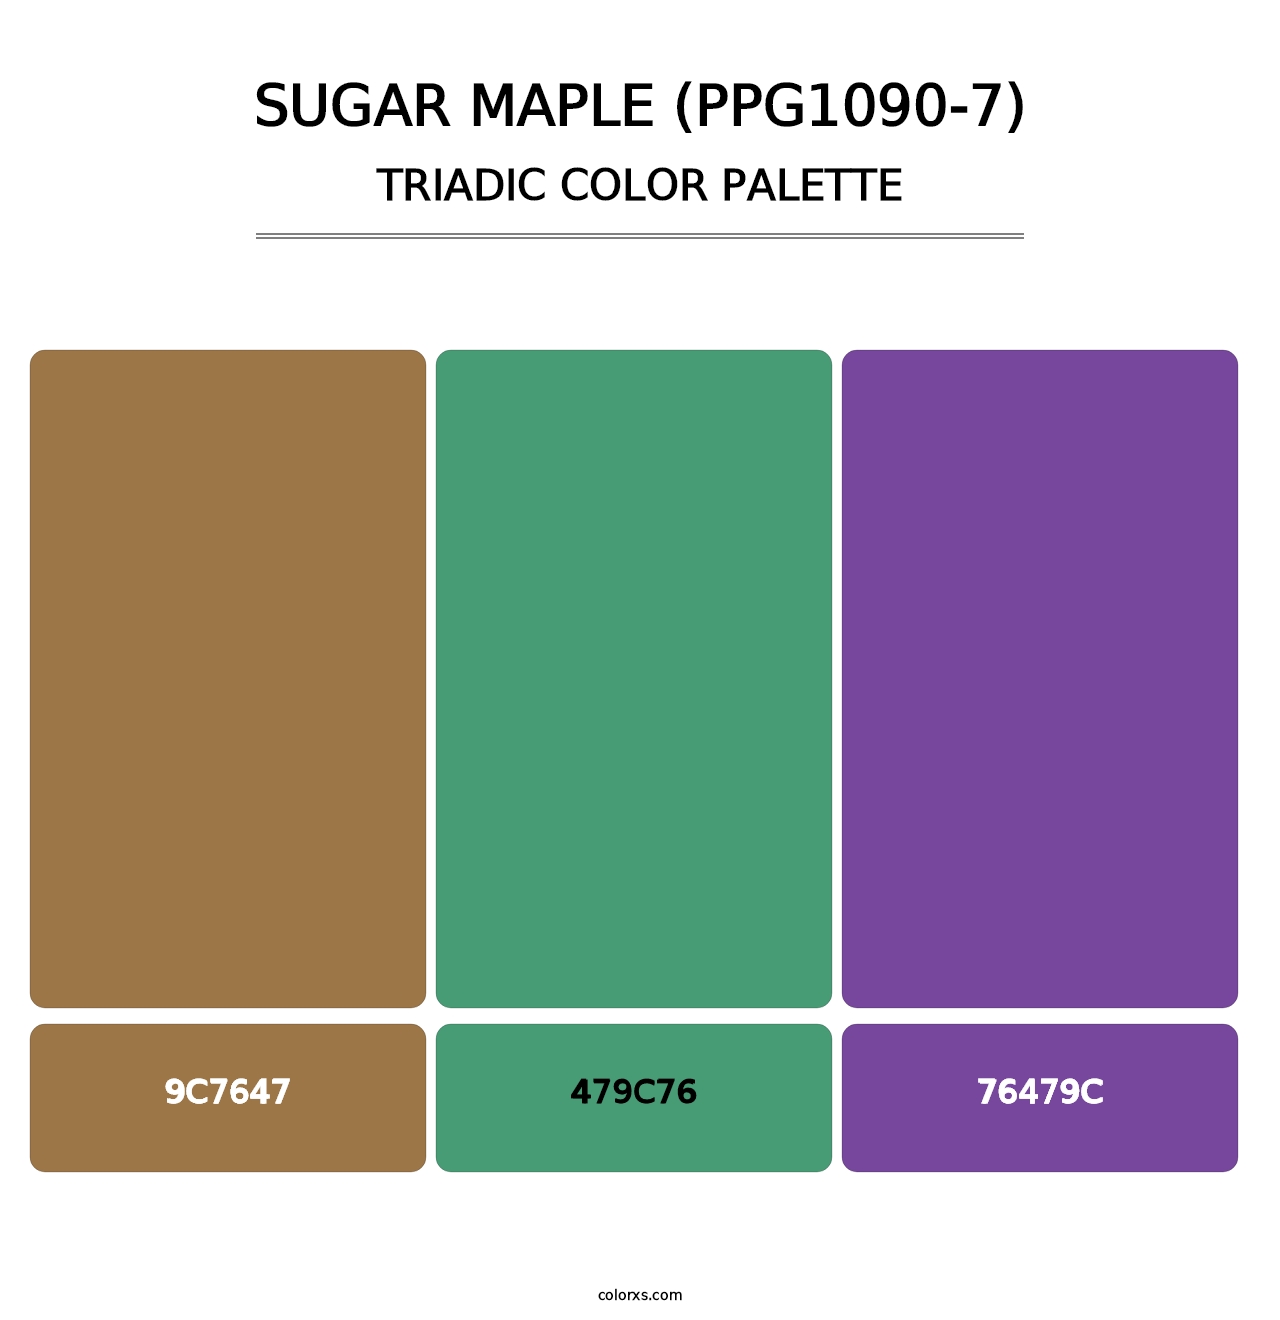 Sugar Maple (PPG1090-7) - Triadic Color Palette